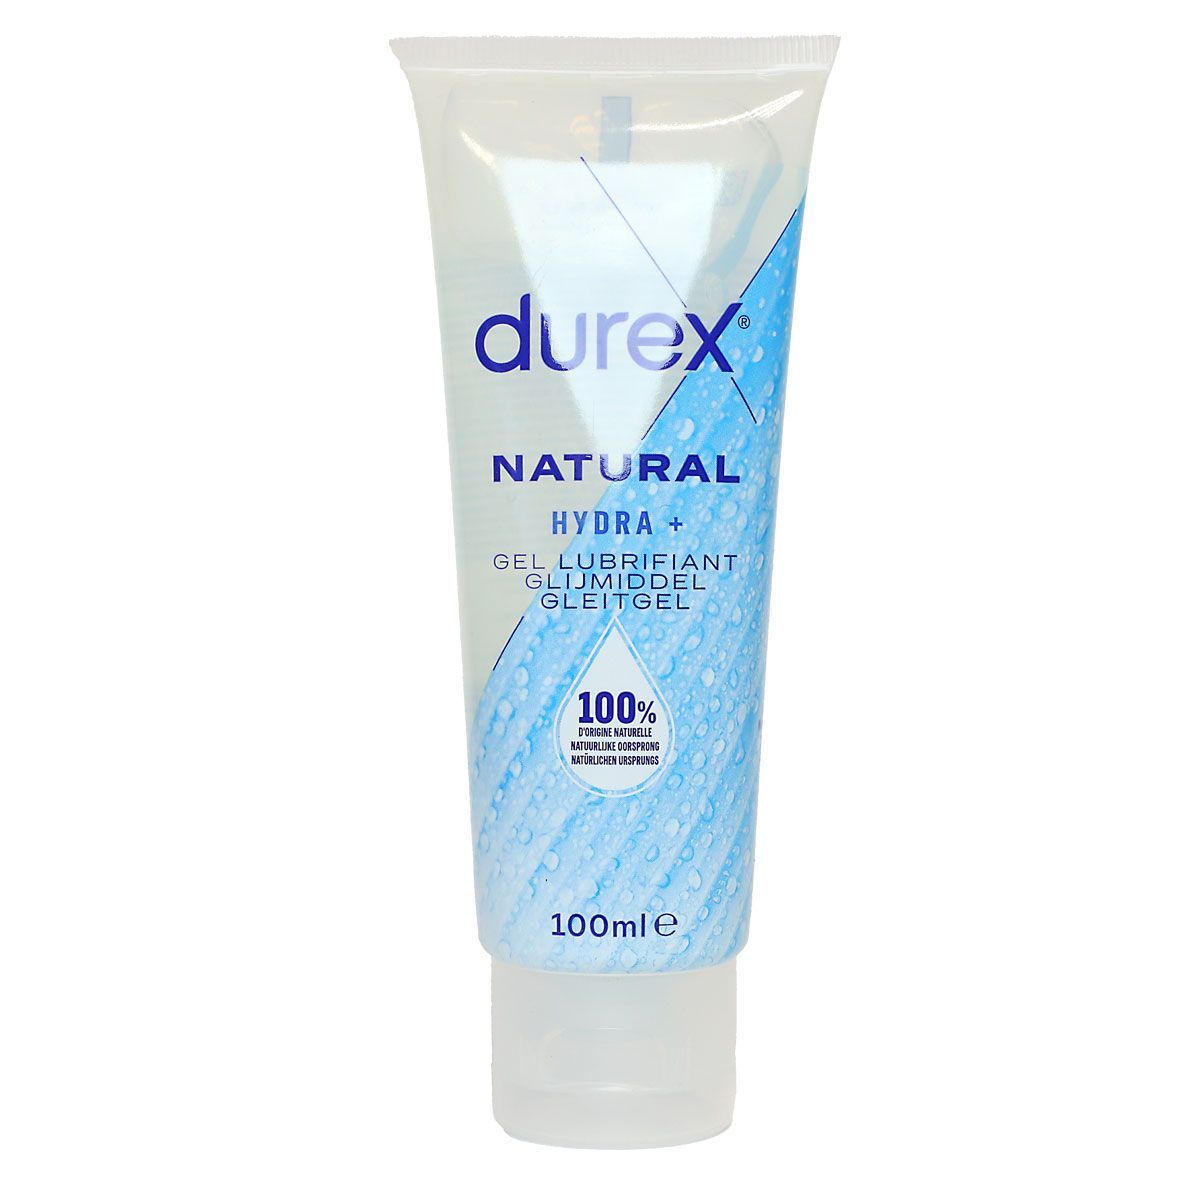 Durex Préservatif perlé en latex Pleasure Ultra - Contraceptif